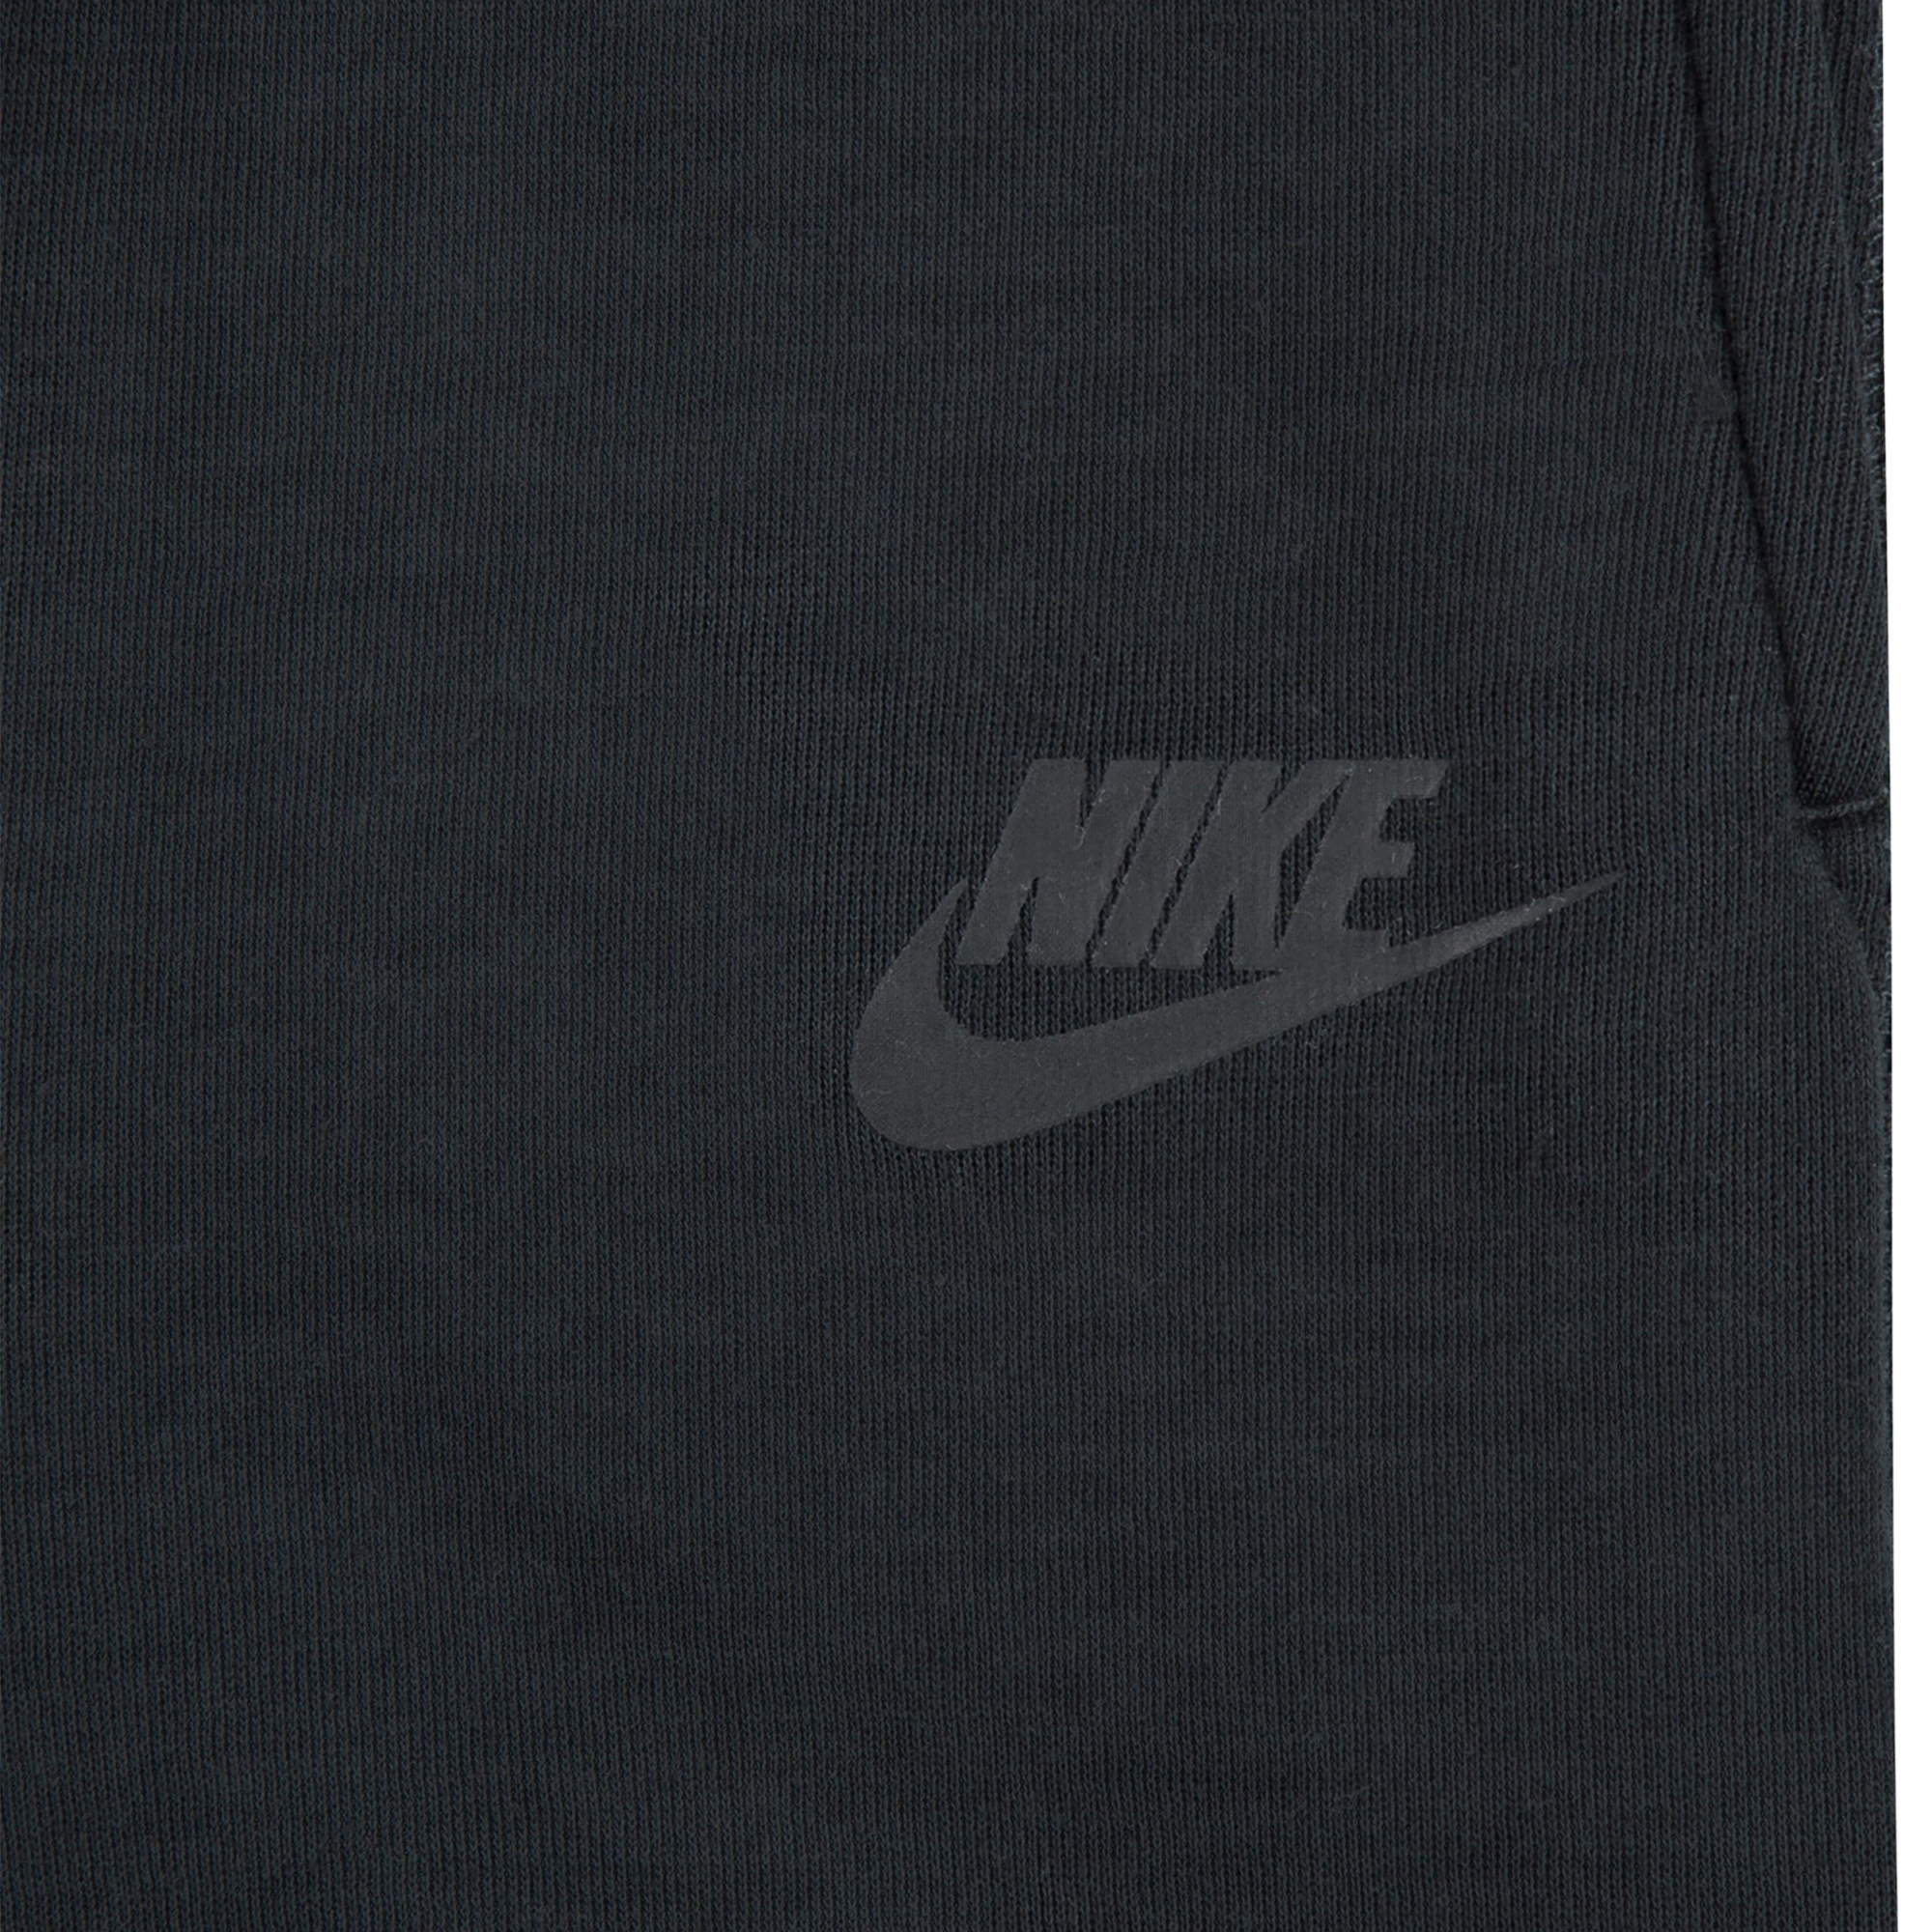 Nike Tech Fleece Hooded Full-Zip Set